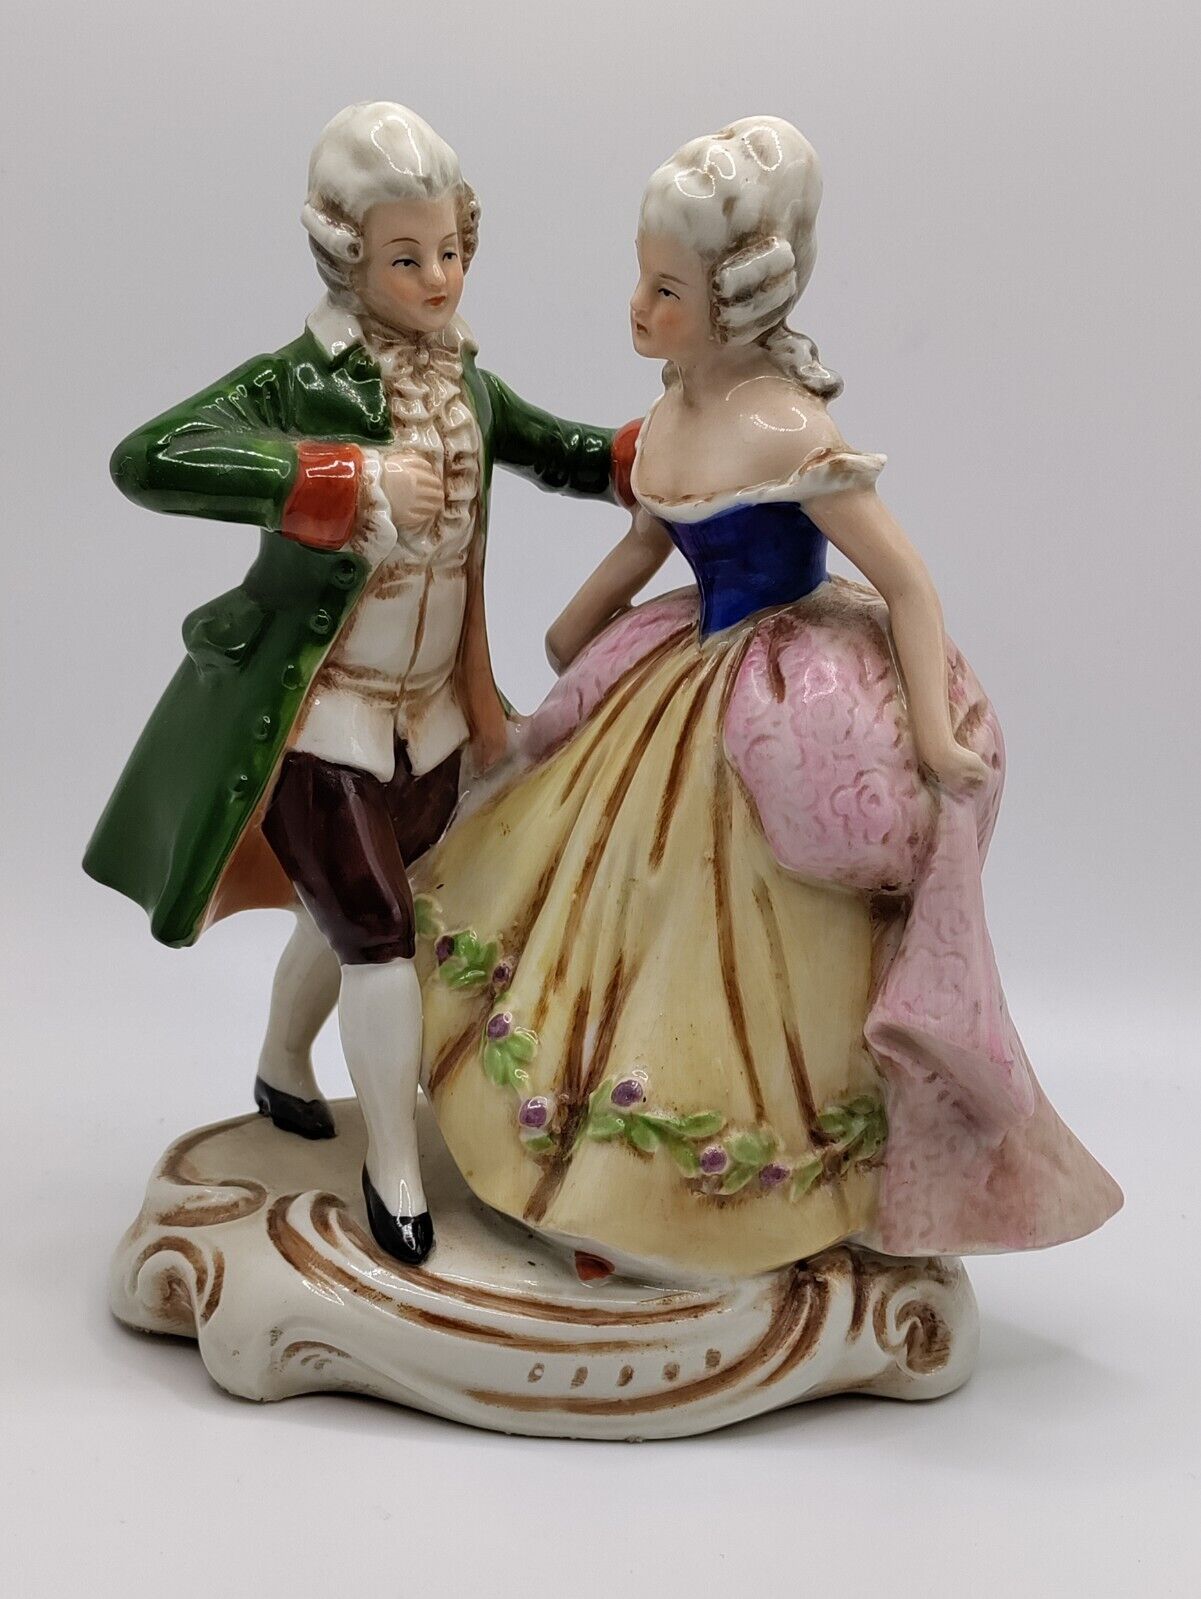 Antique Germany Dancing Couple Porcelain Figurine